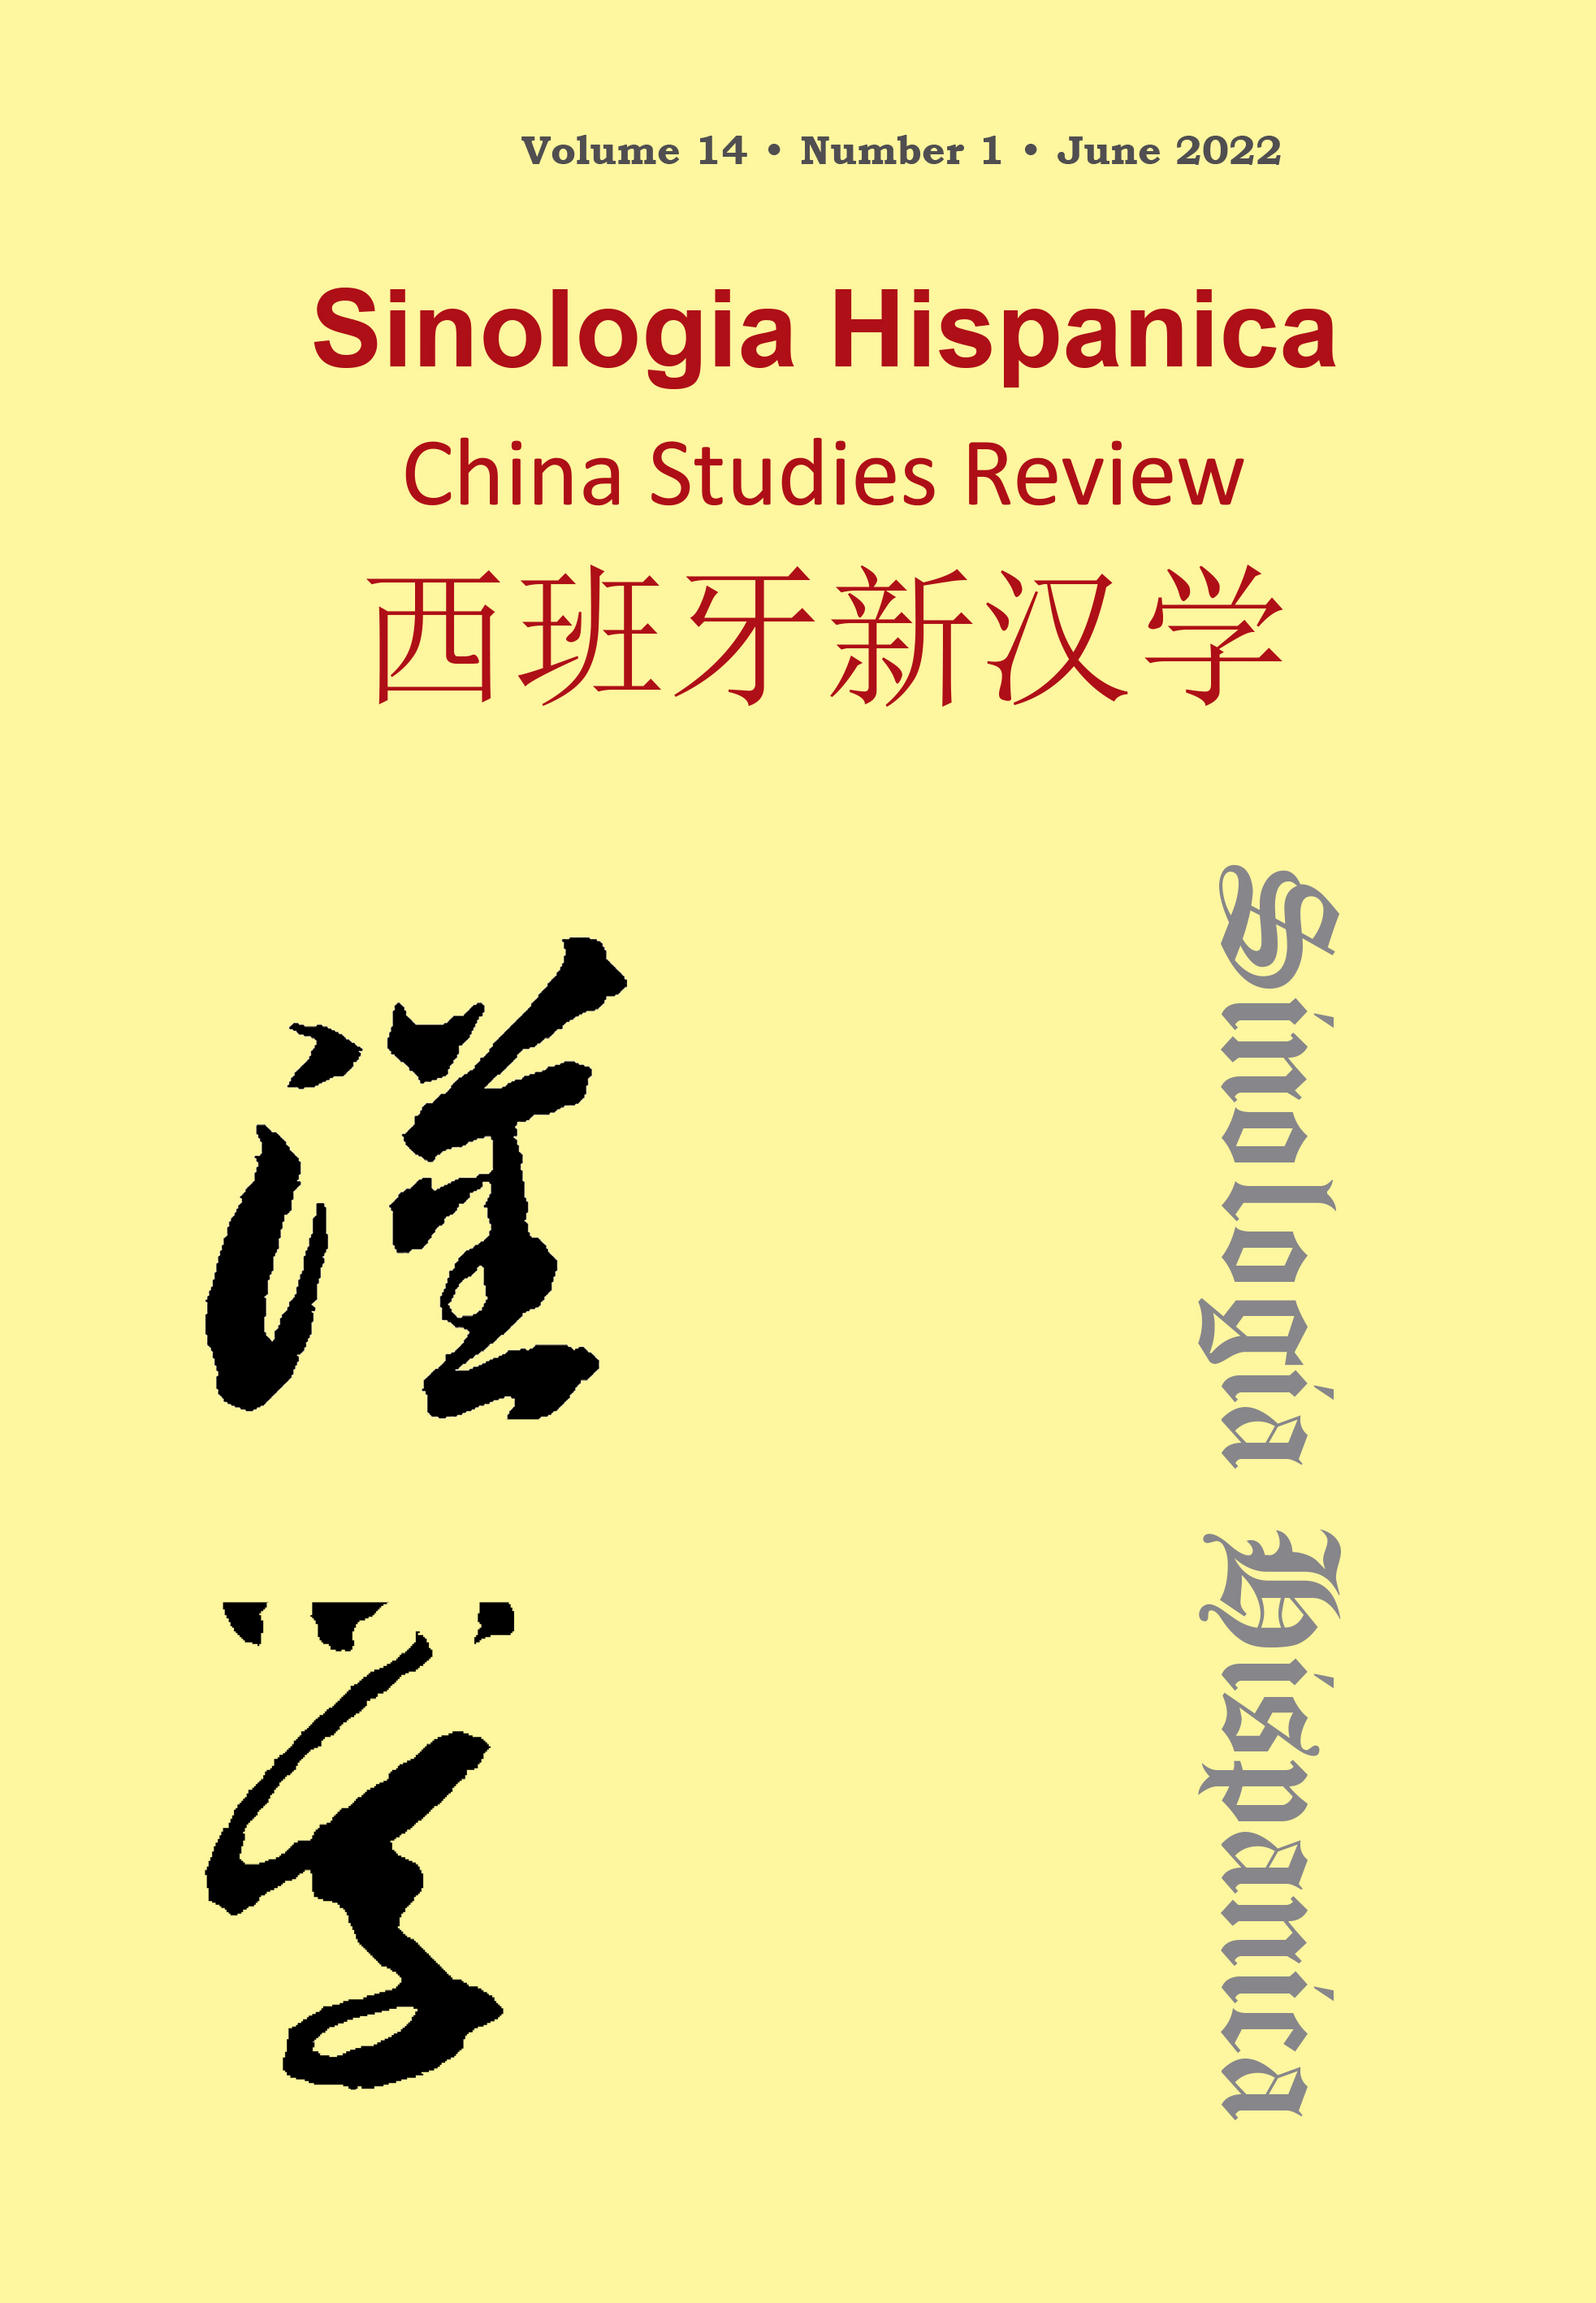 SINOLOGIA HISPANICA China Studies Review Vol. 14 No. 1 June 2022